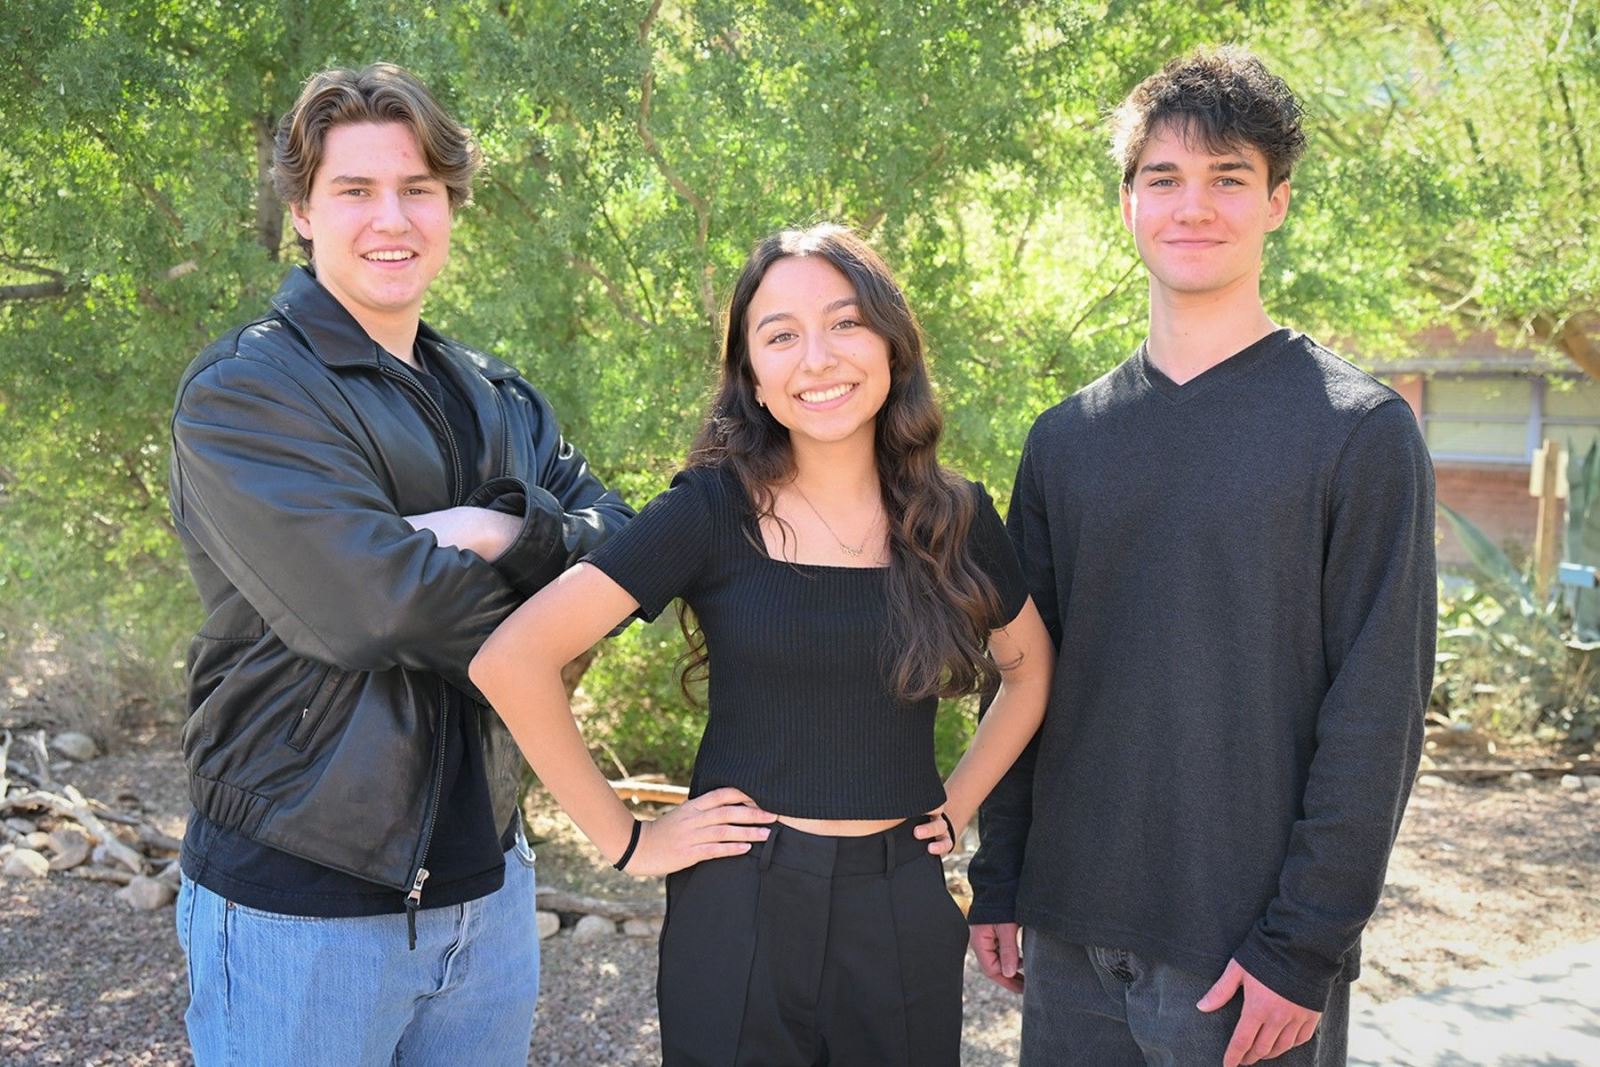 UHS Flinn Scholarship semifinalists Ben Gerber, Jennifer Orozco Torres and Jared Matheson